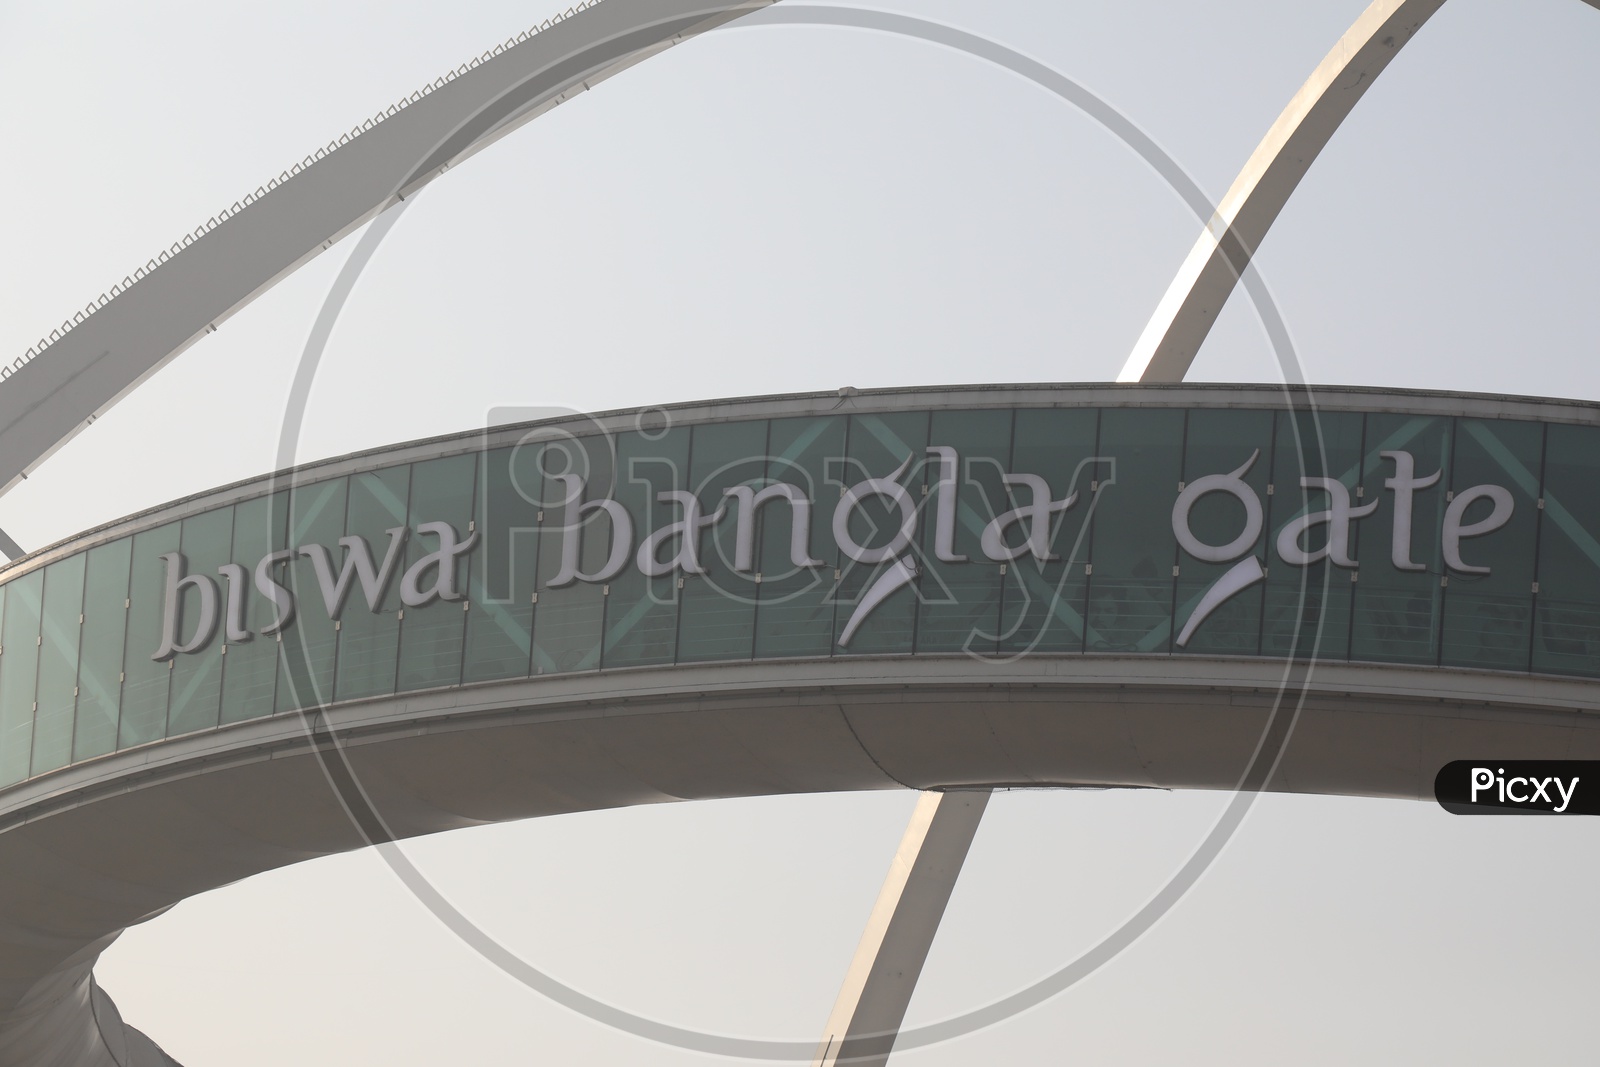 Biswa Bangla Gate Or Kolkata Gate Closeup